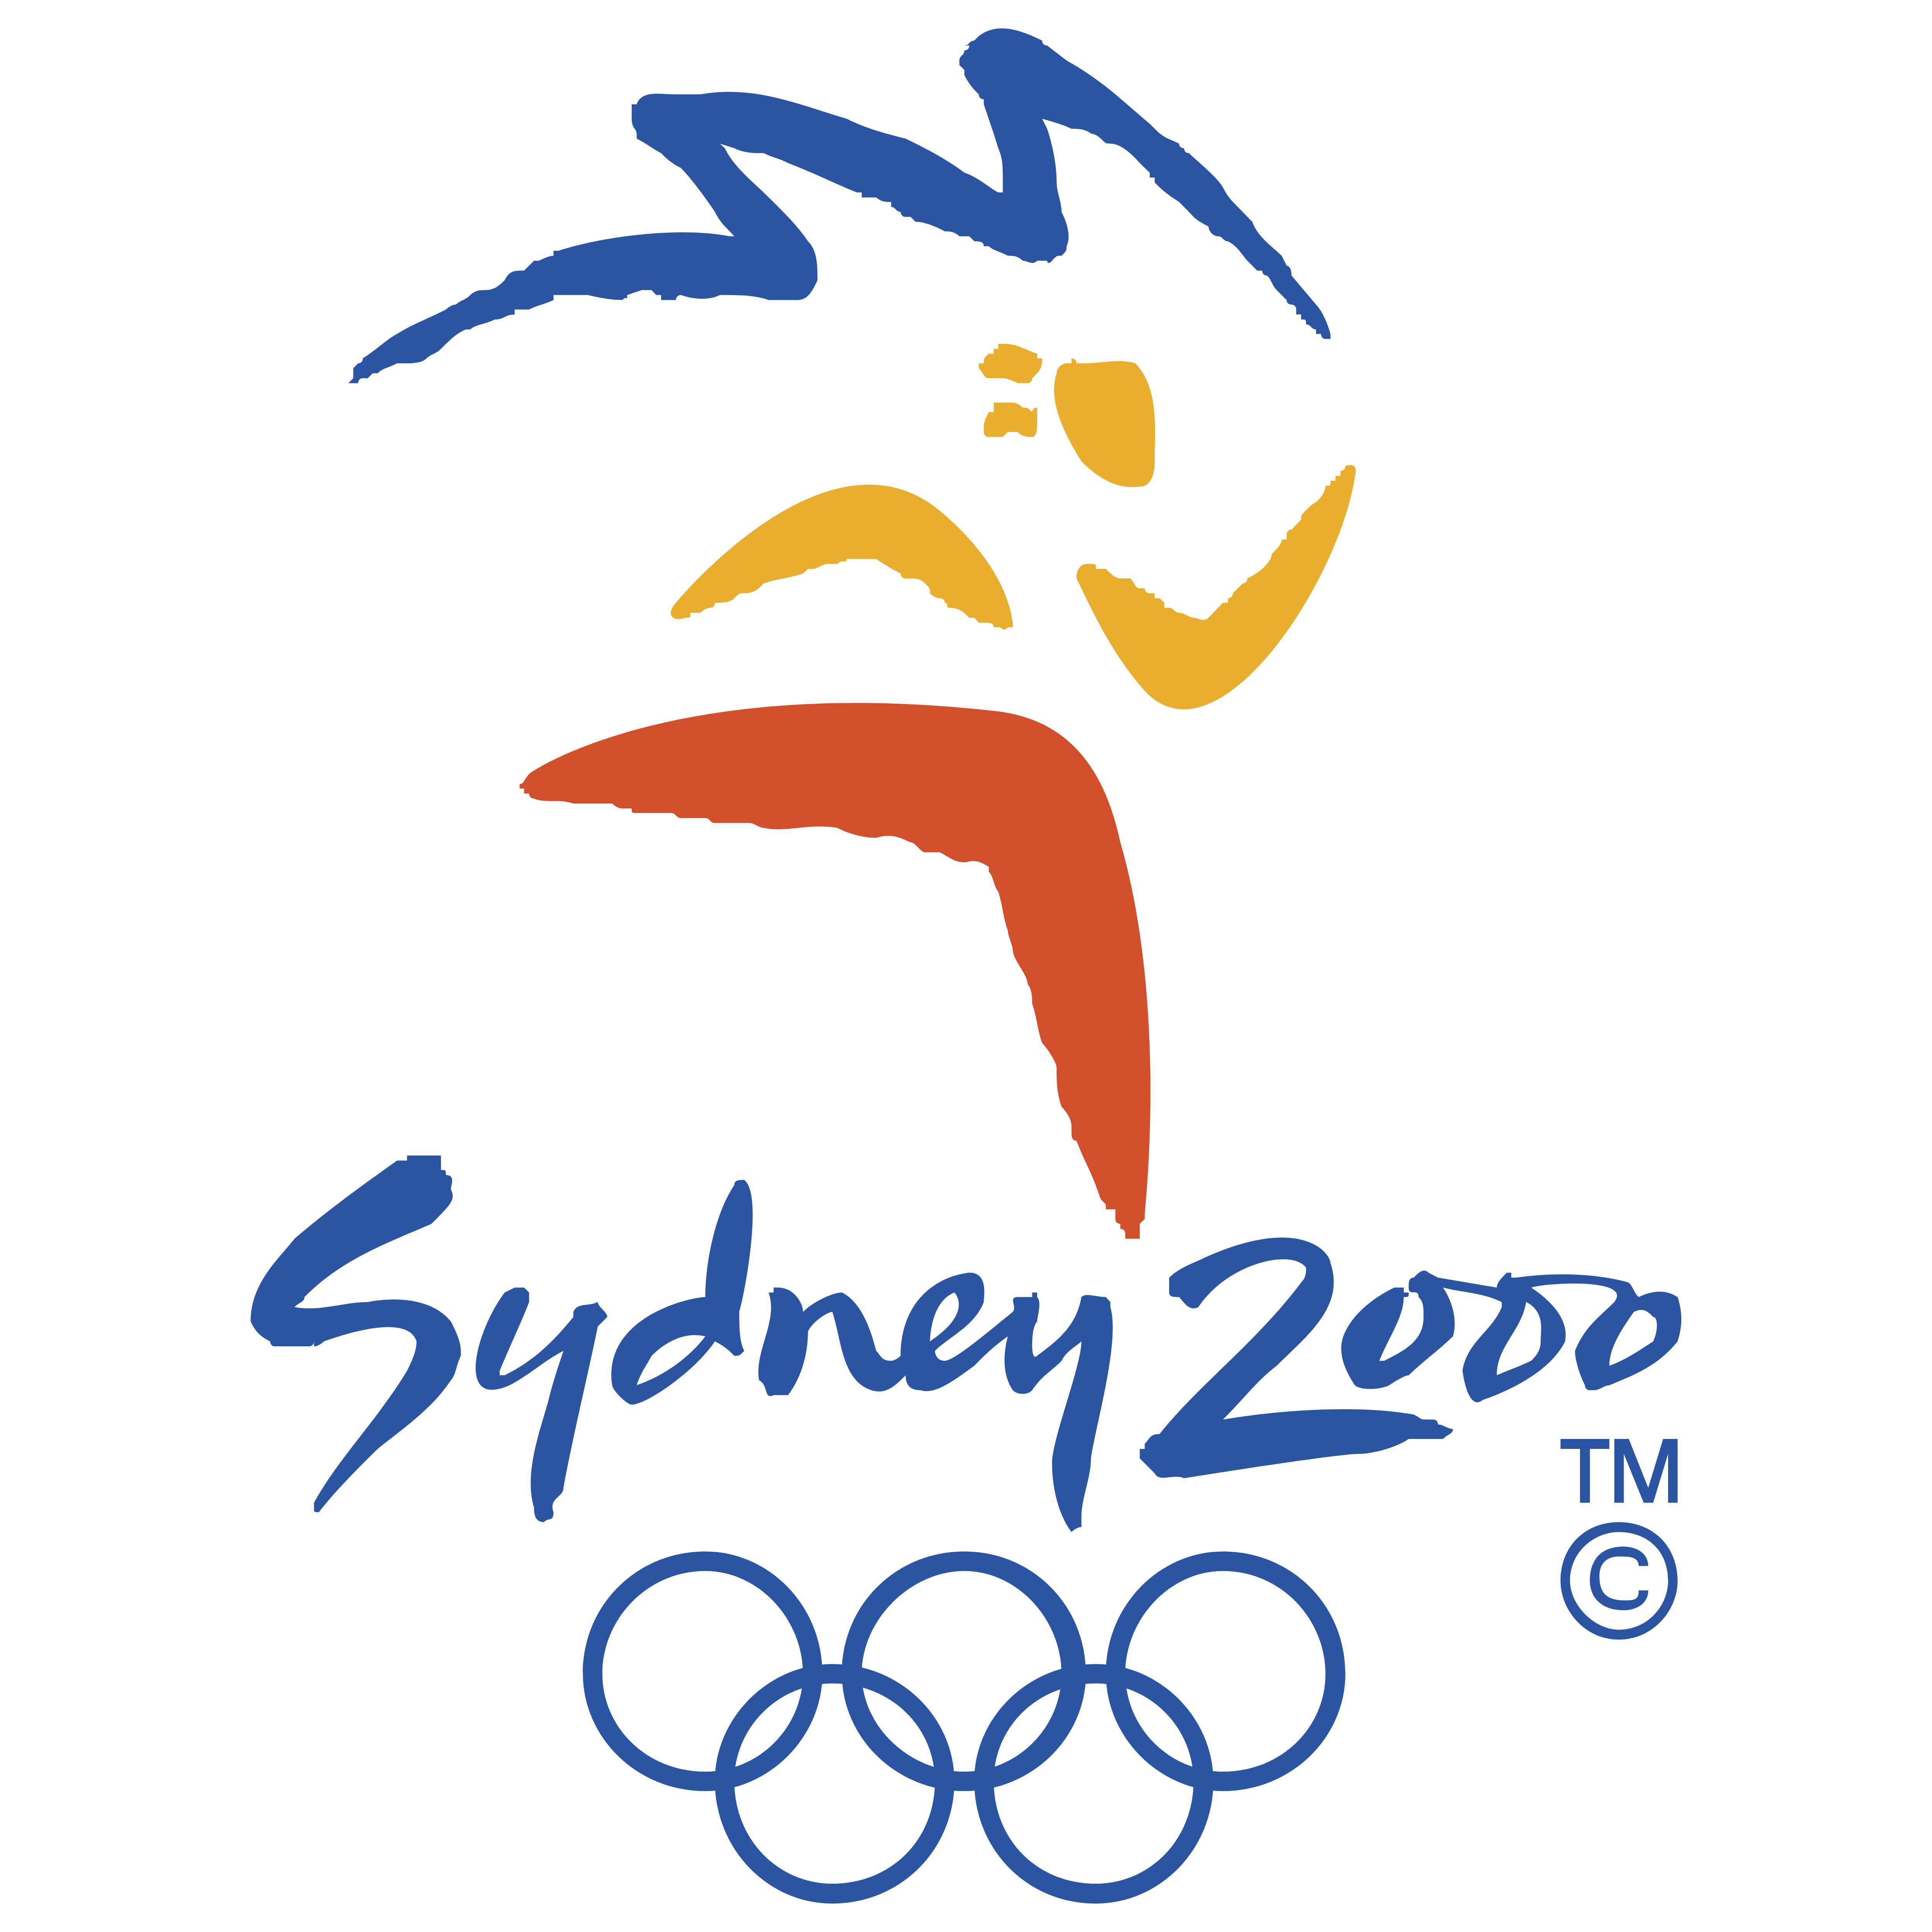 Sydney 2000 logo c